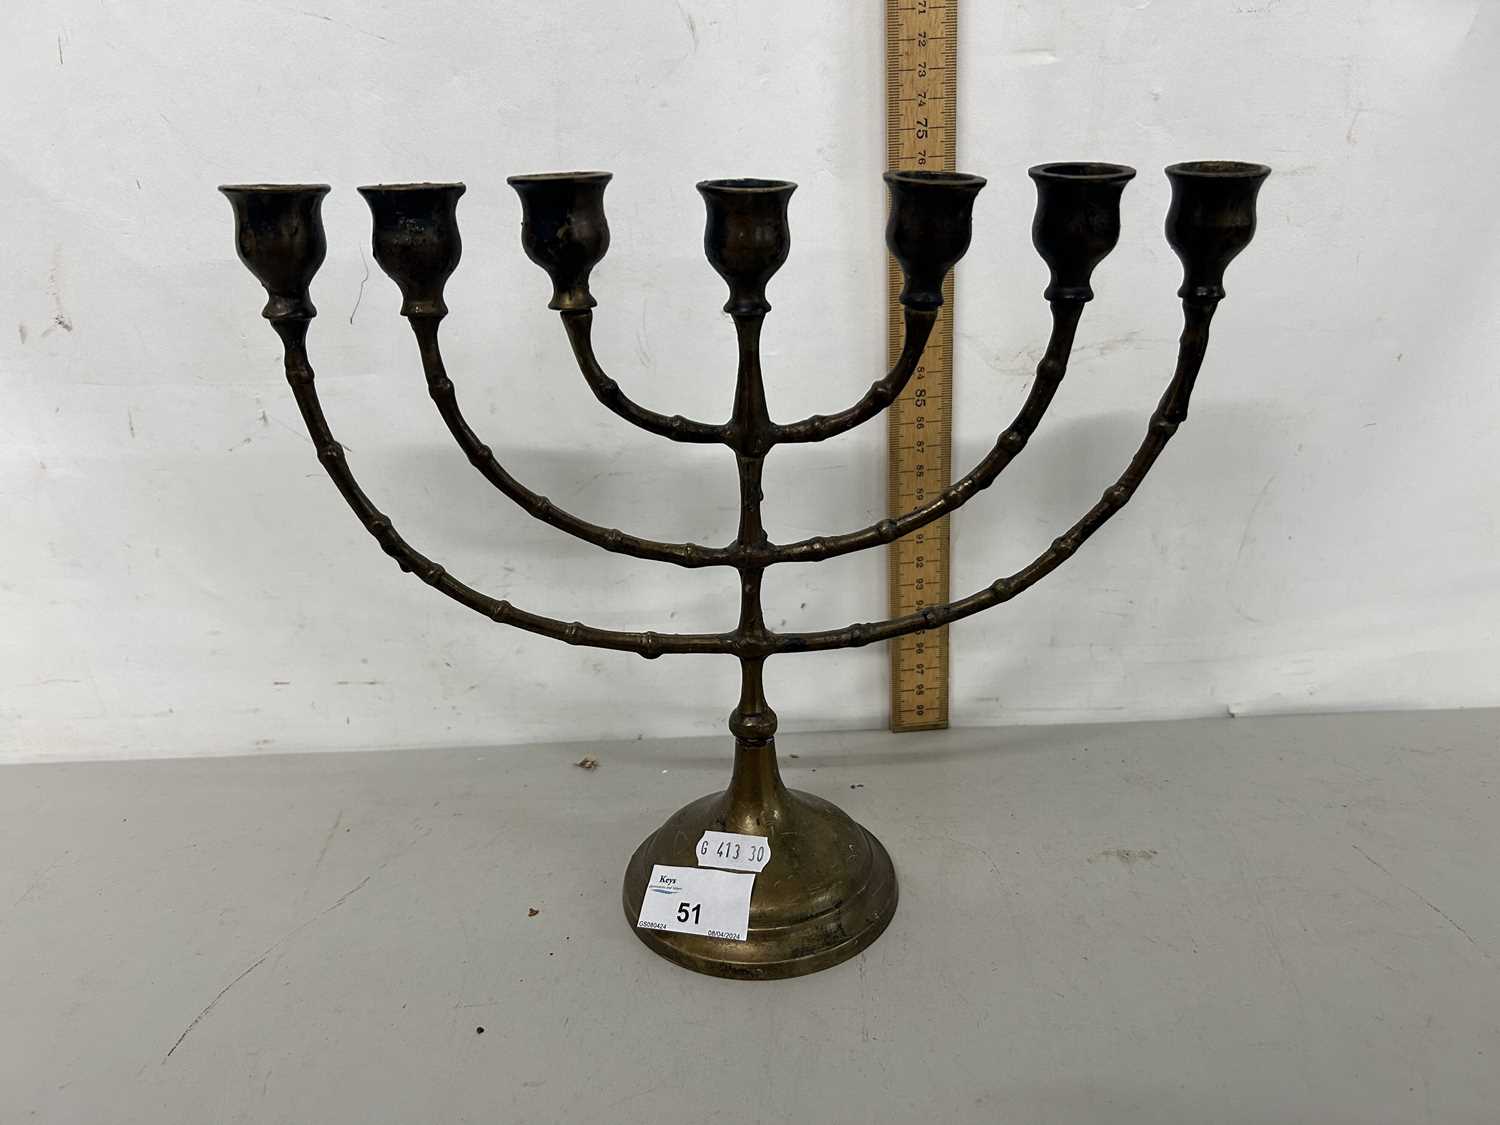 Brass Jewish Menora candlestick